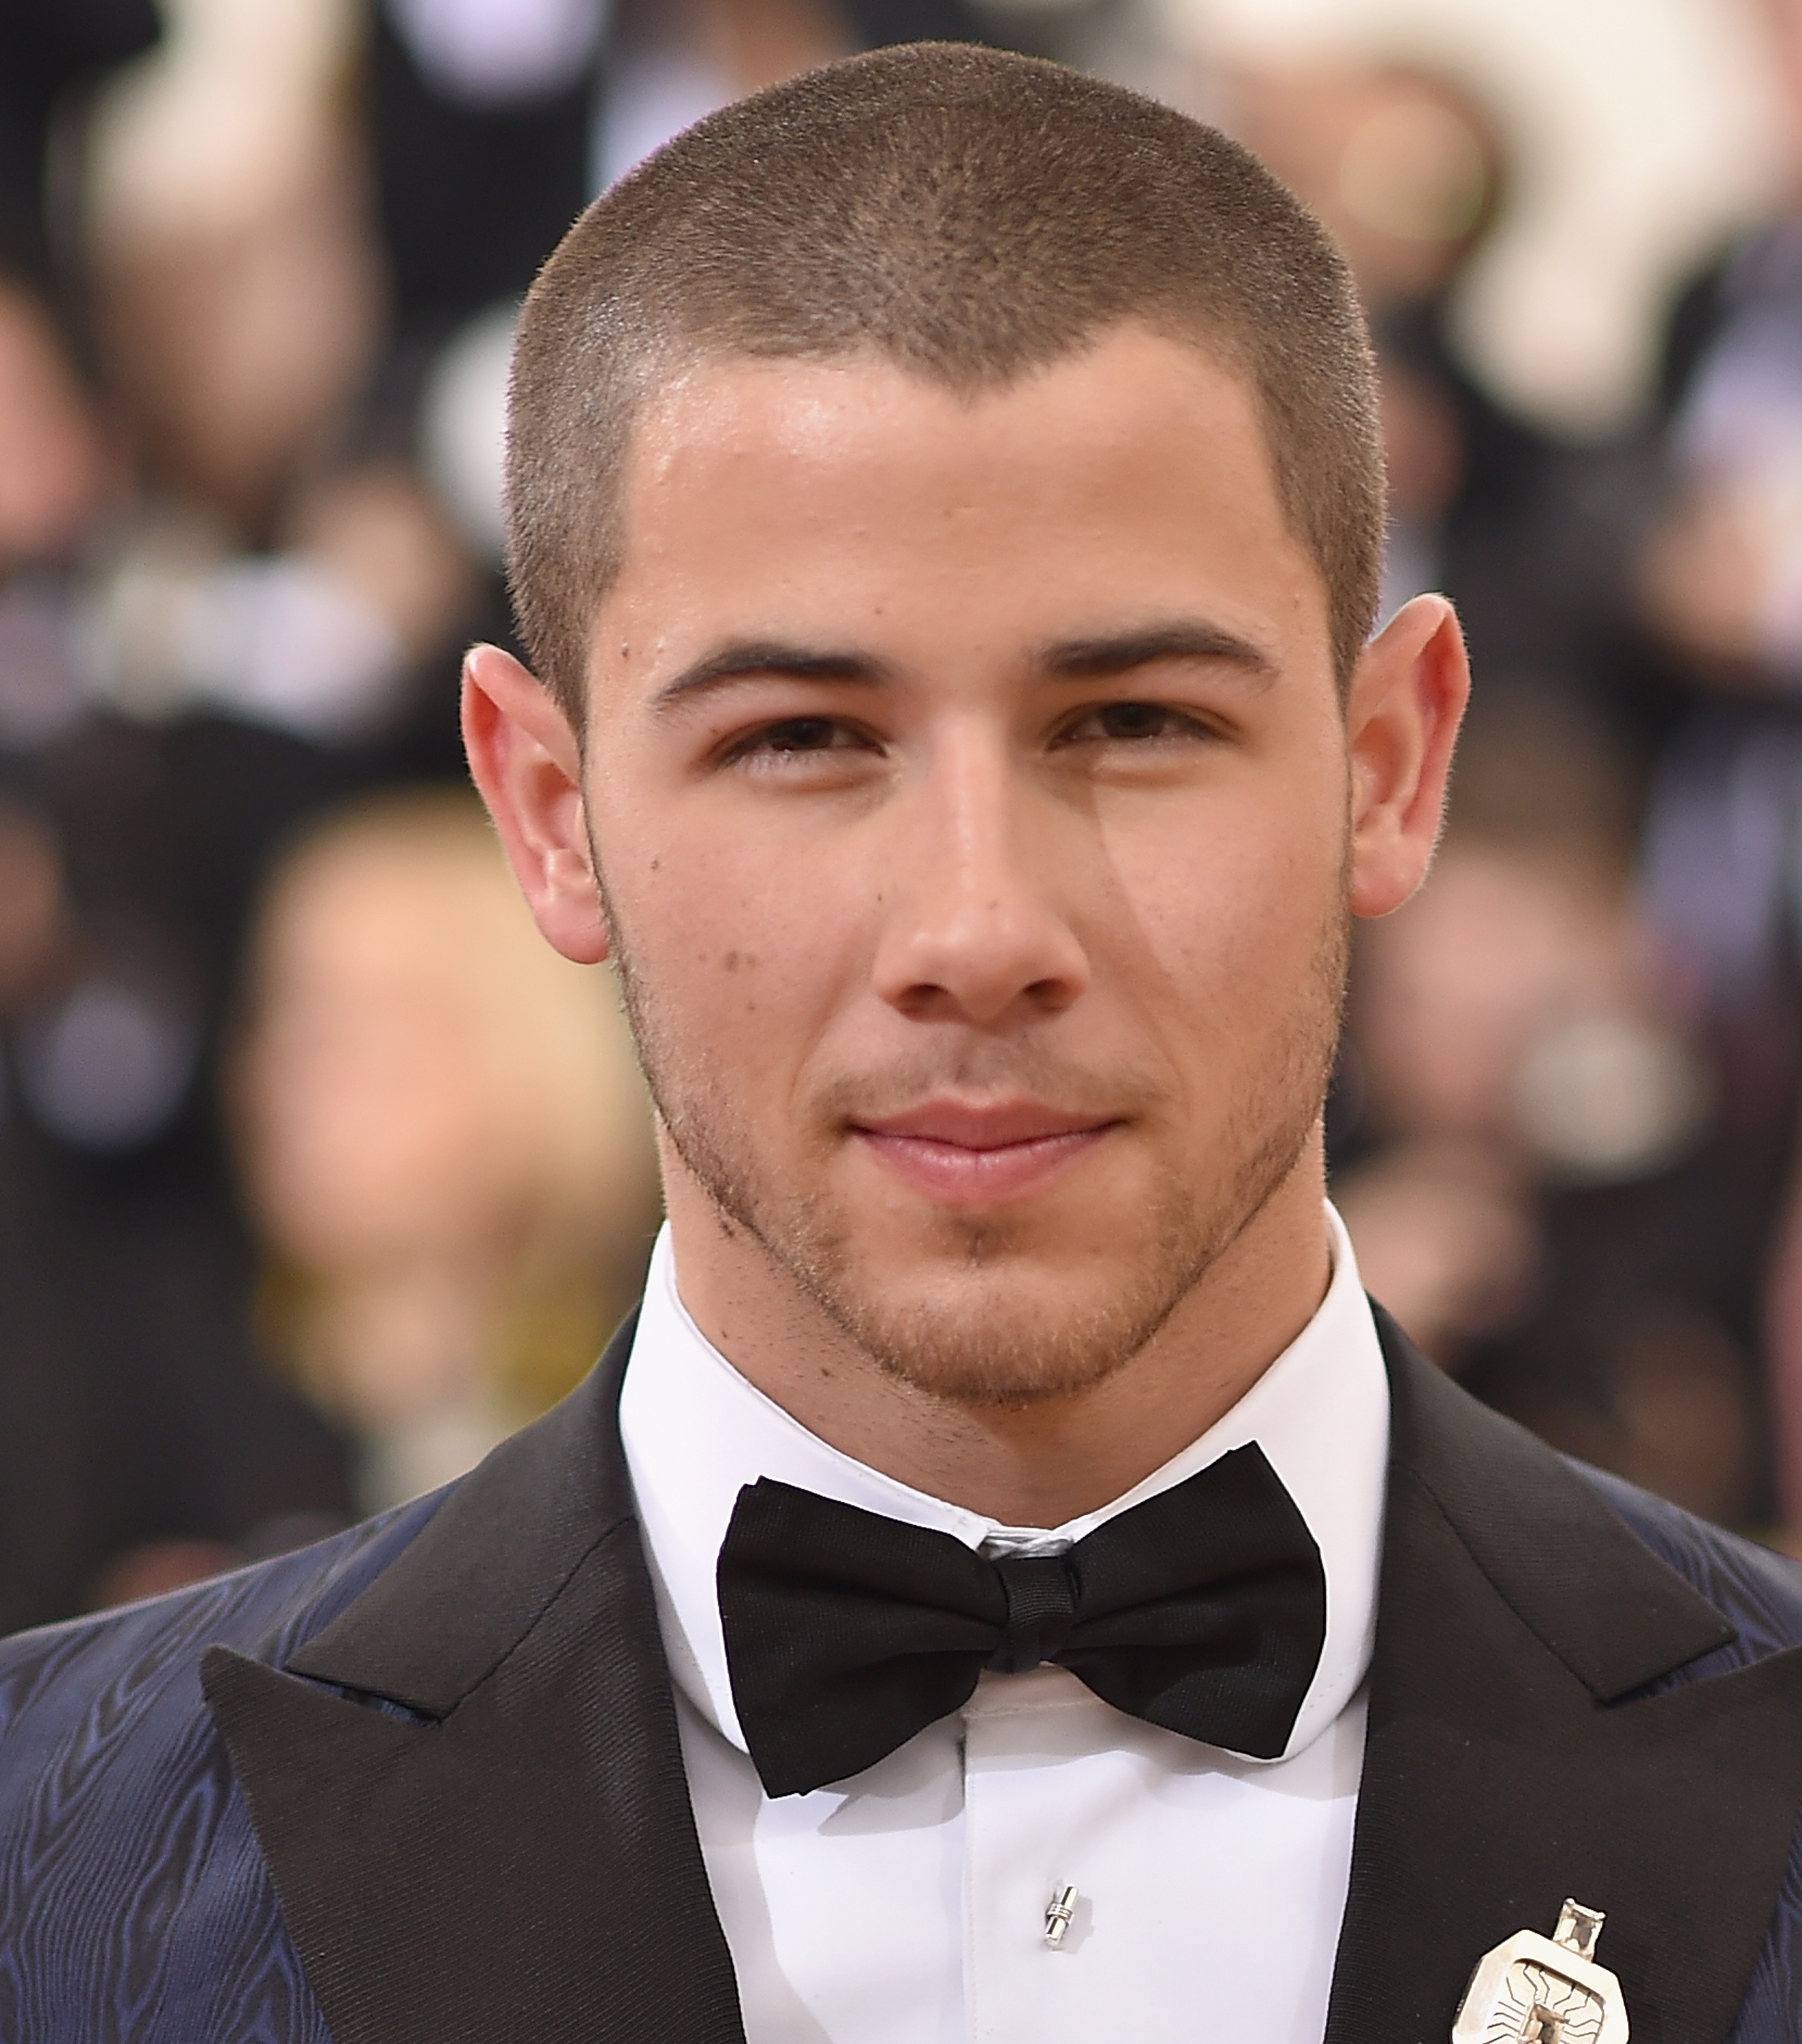 Nick Jonas Isn't "Gay Baiting" To Win LGBT Fans.